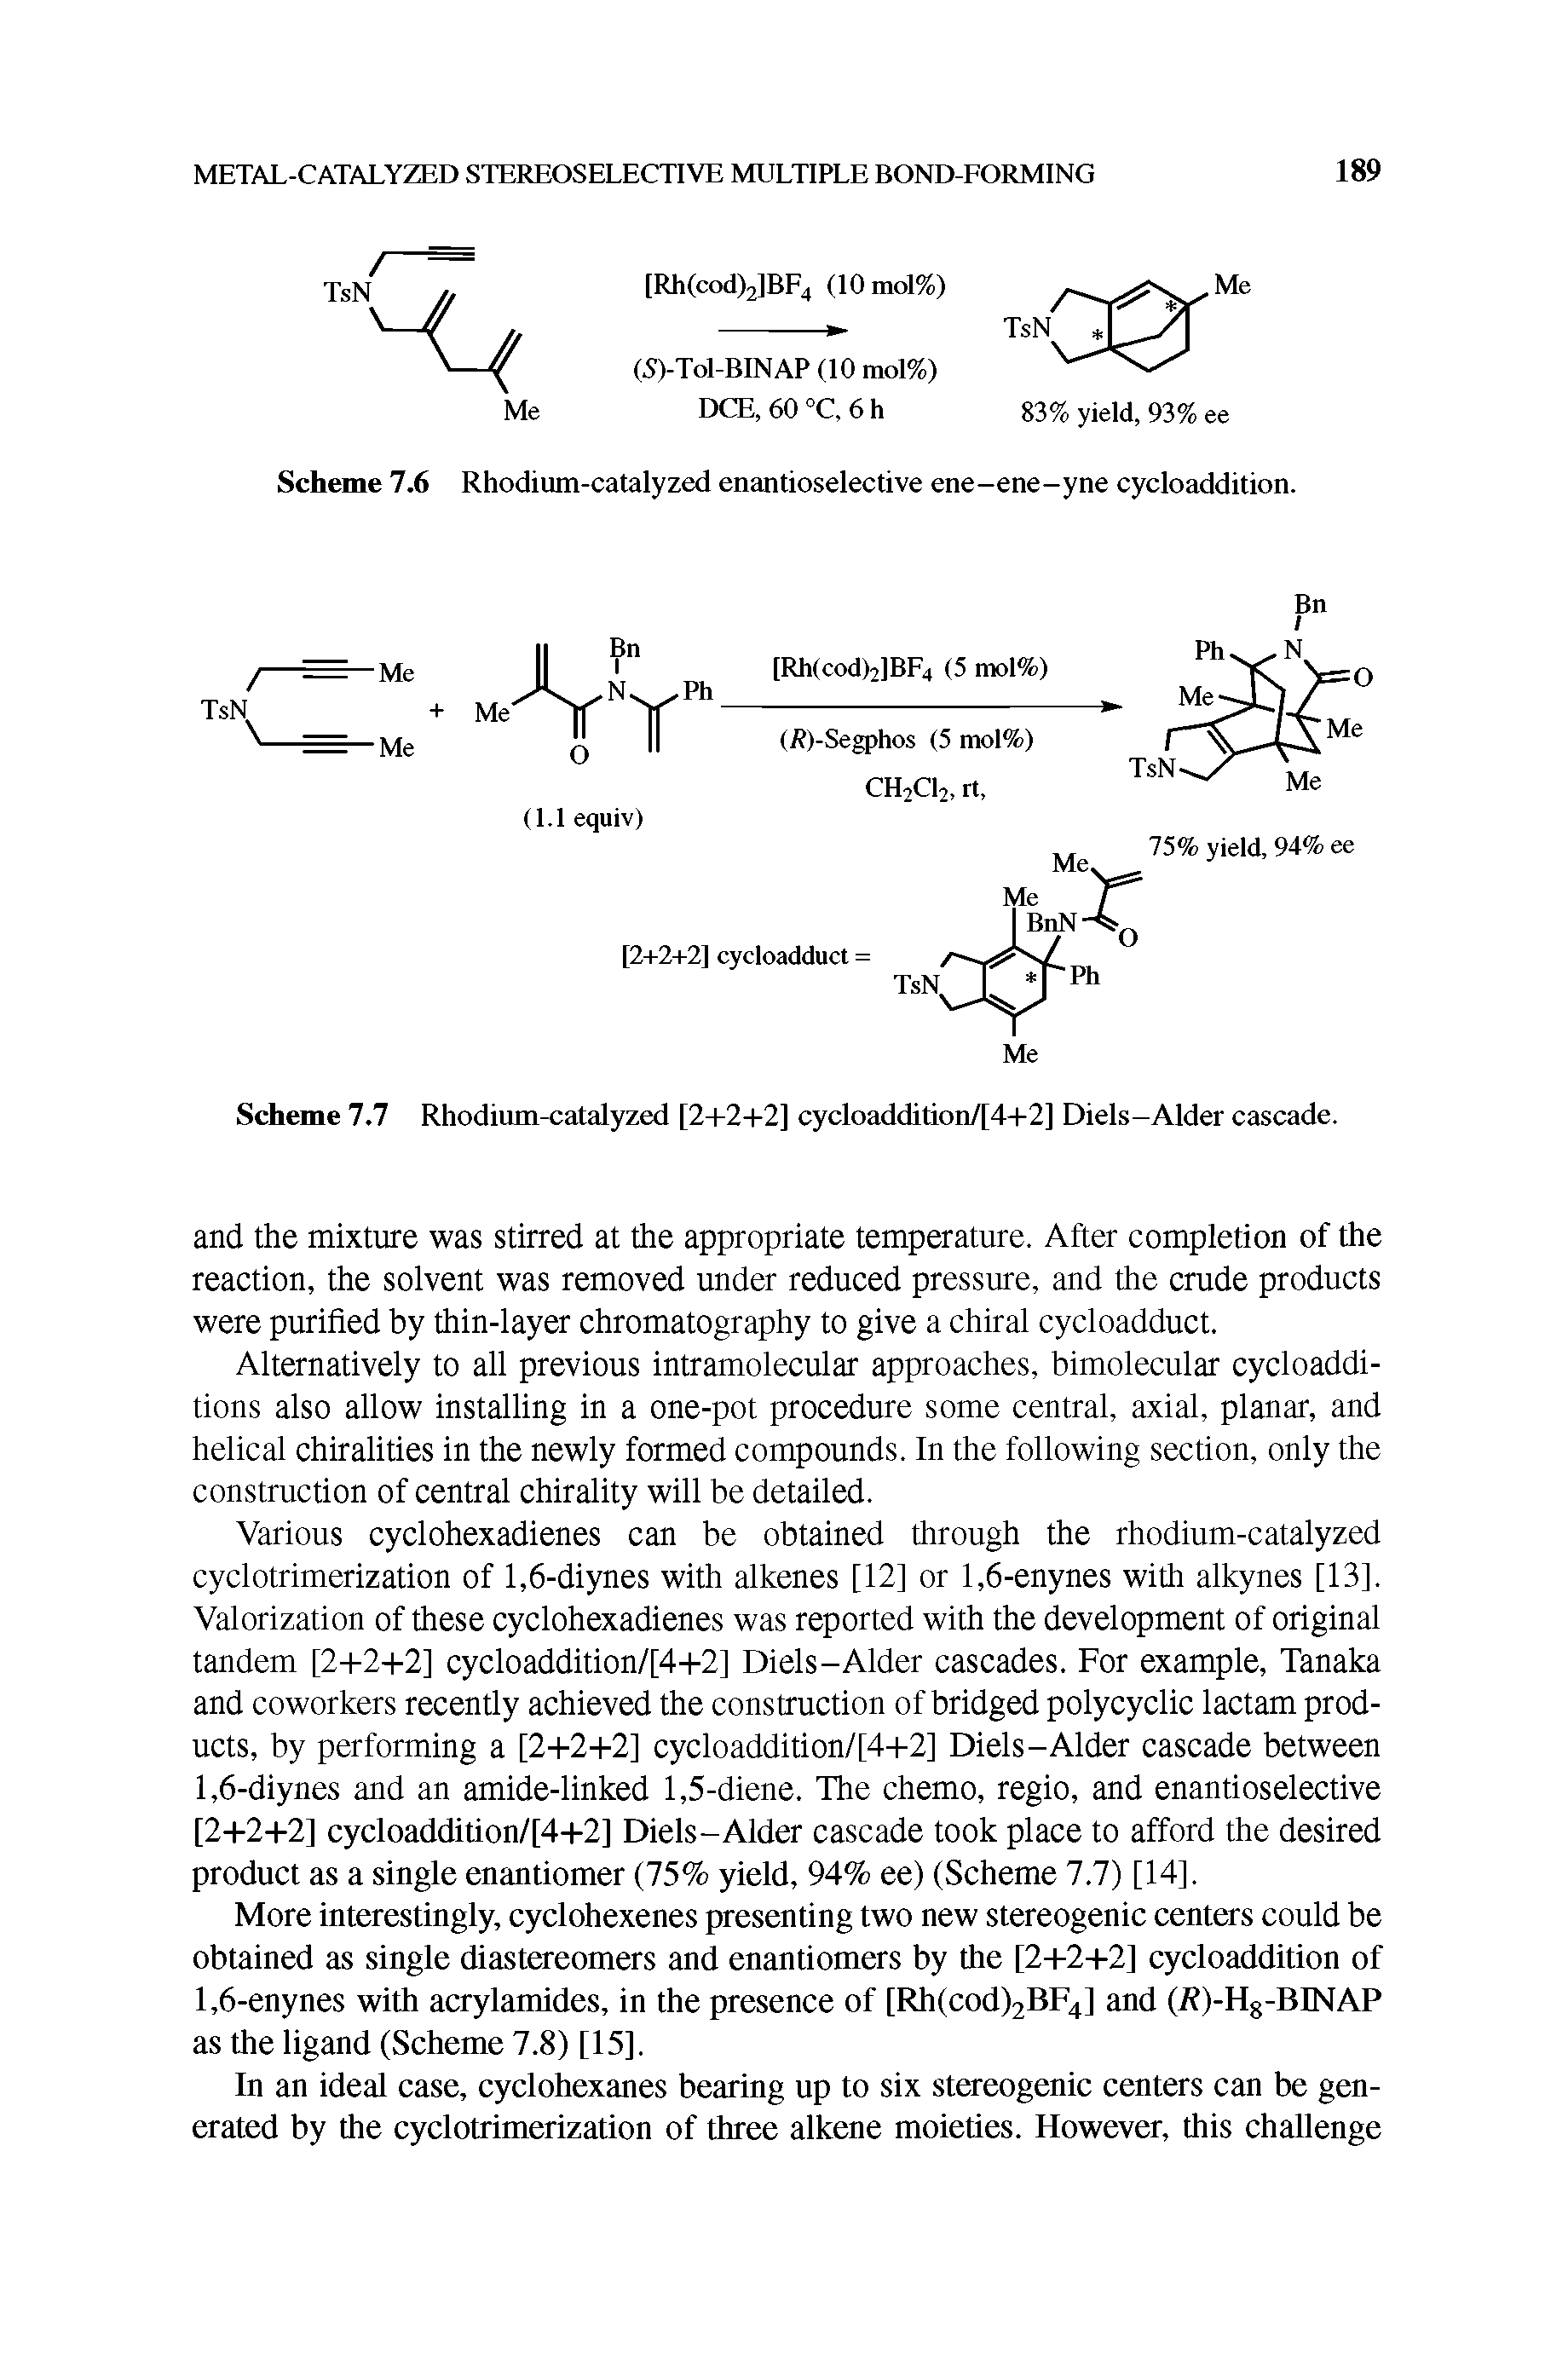 Scheme 7.7 Rhodium-catalyzed [2-1-2-1-2] cycloadditioii/[4-l-2] Diels-Alder cascade.